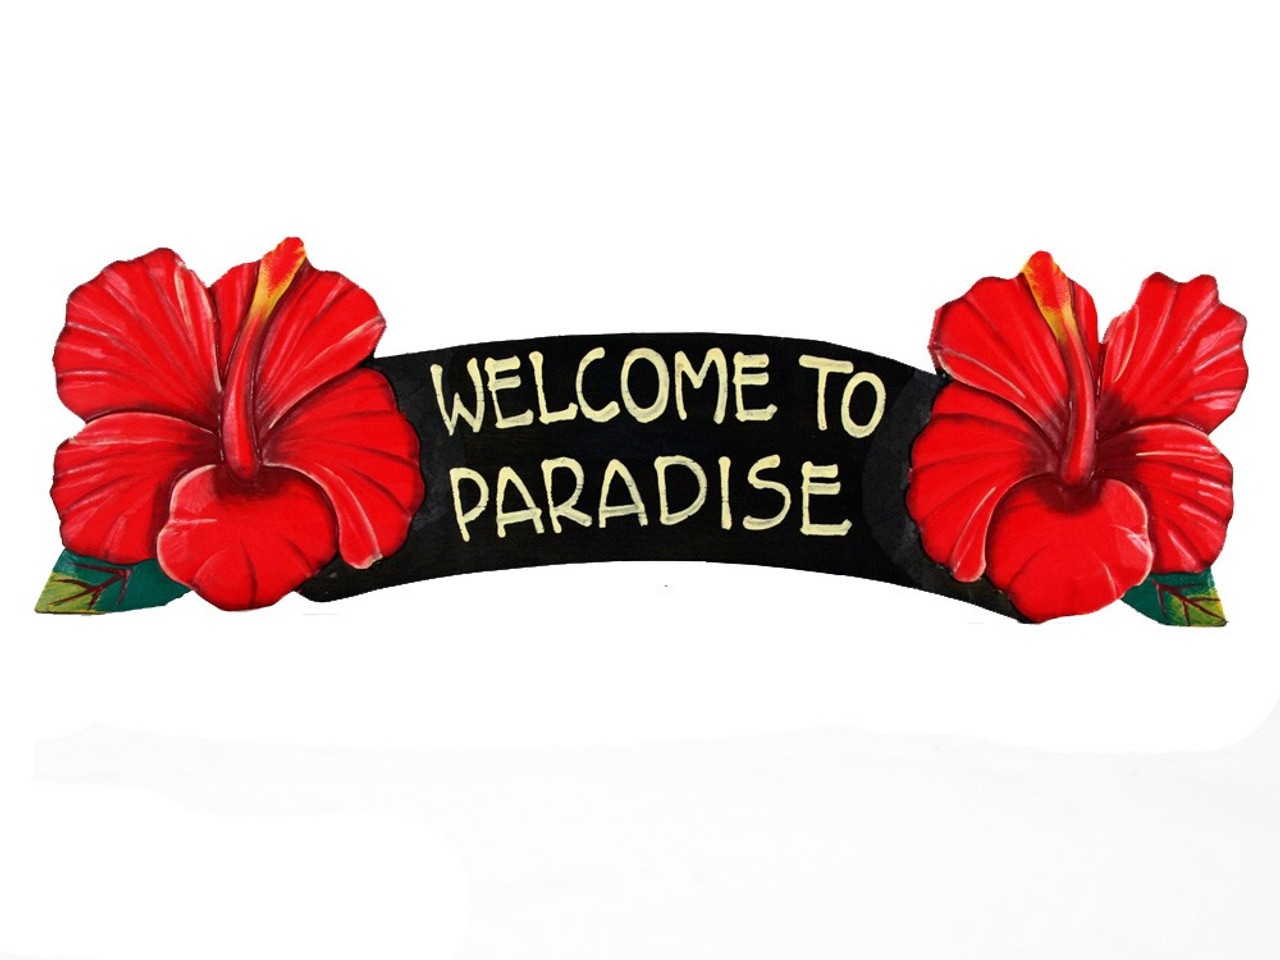 Welcome to paradize трейнер. Welcome to Paradise. Welcome to Paradise надпись. Welcome to Paradise табличка. Велком ту Парадайс.